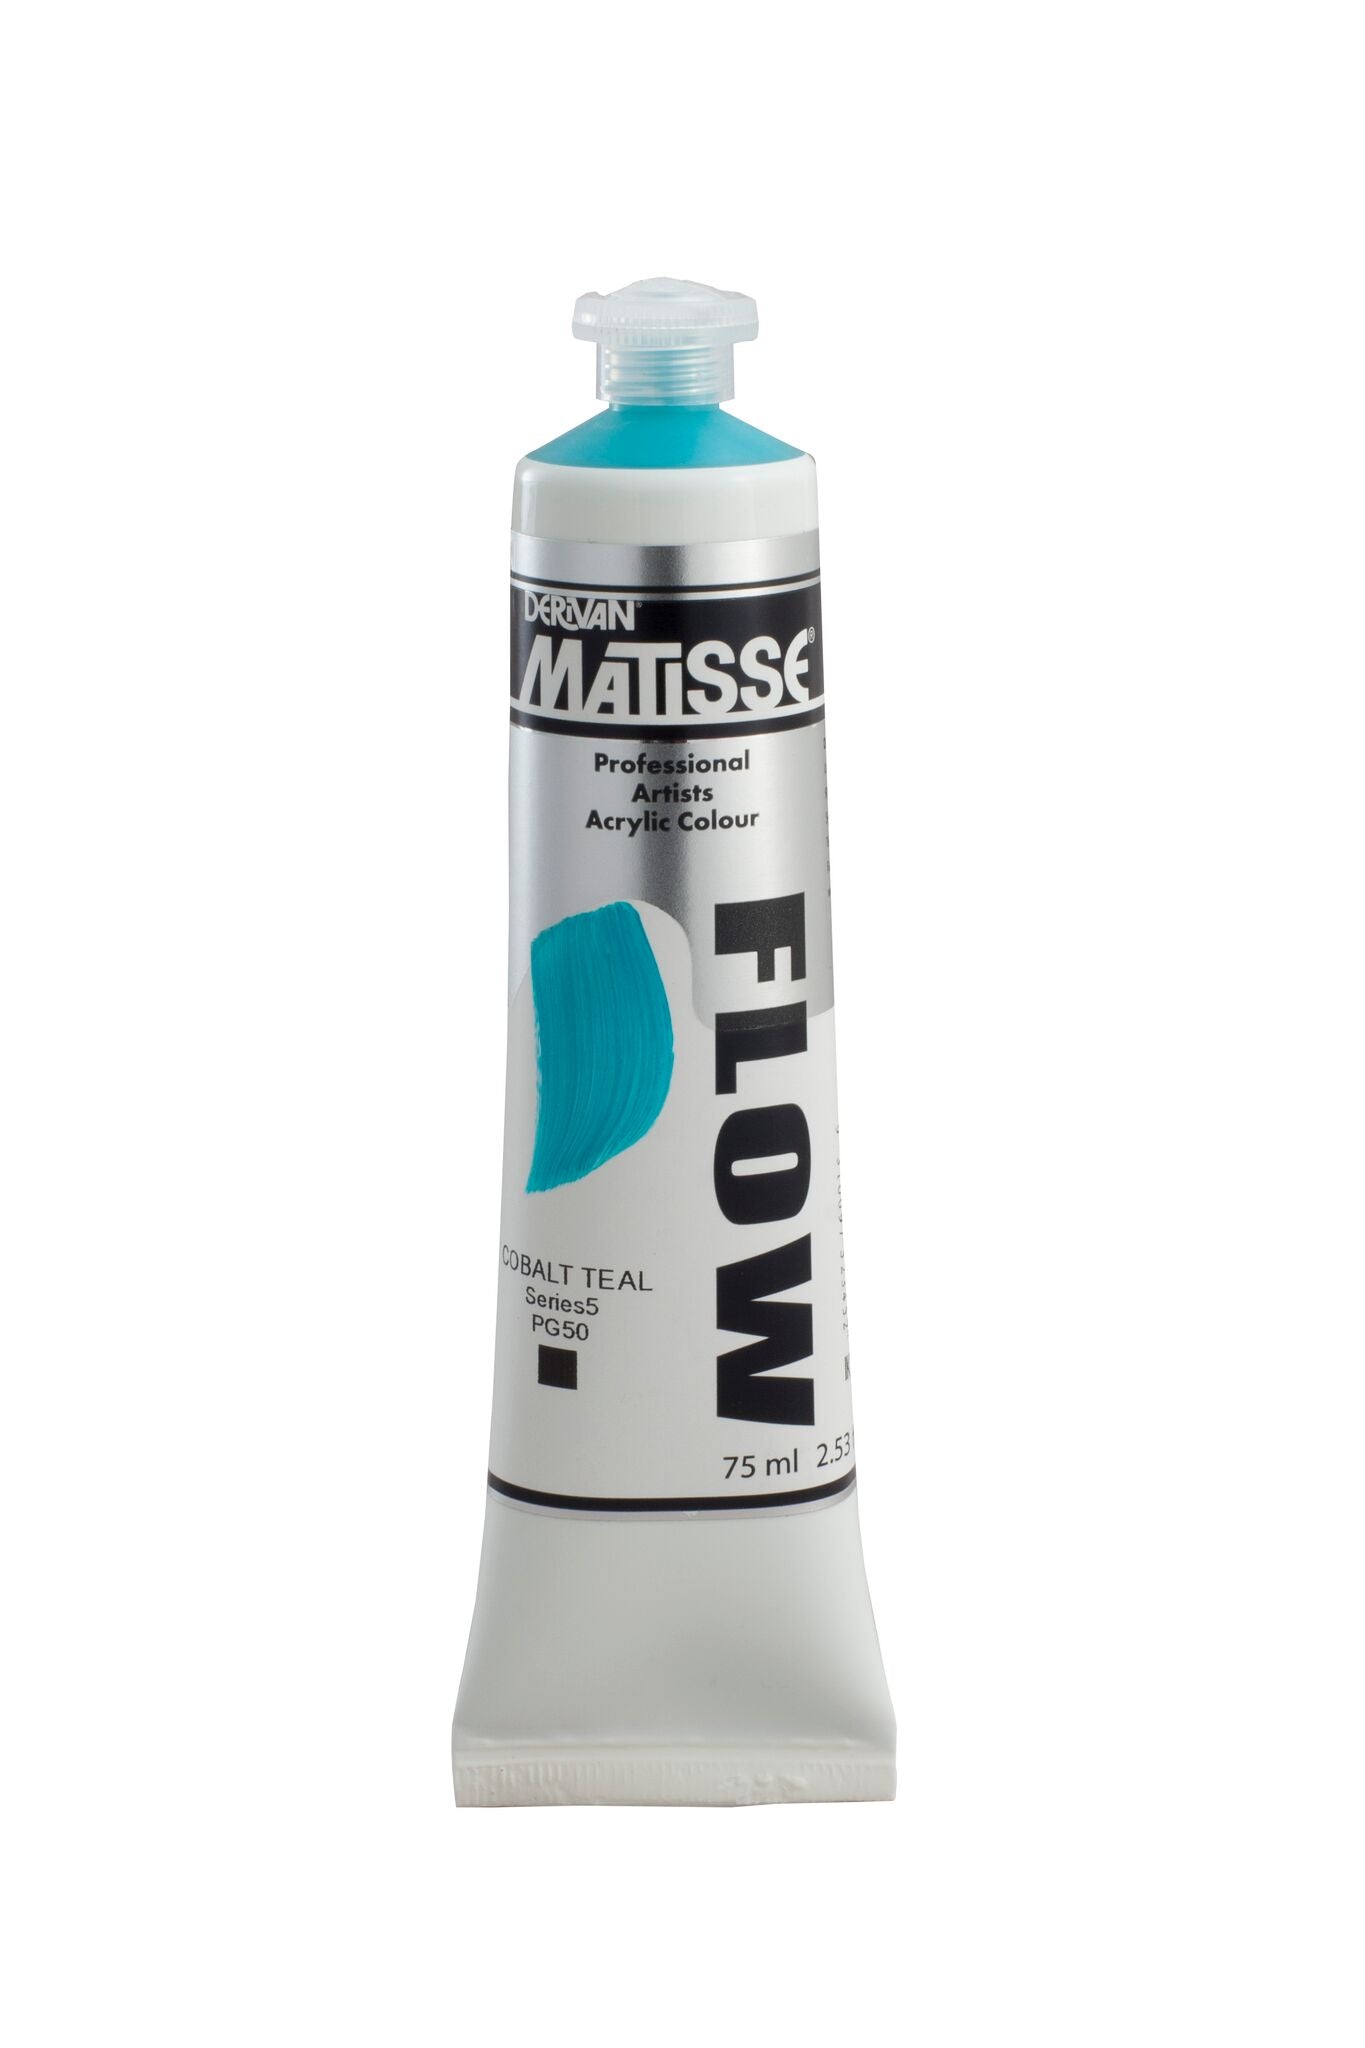 Matisse Flow 75ml Cobalt Teal - theartshop.com.au